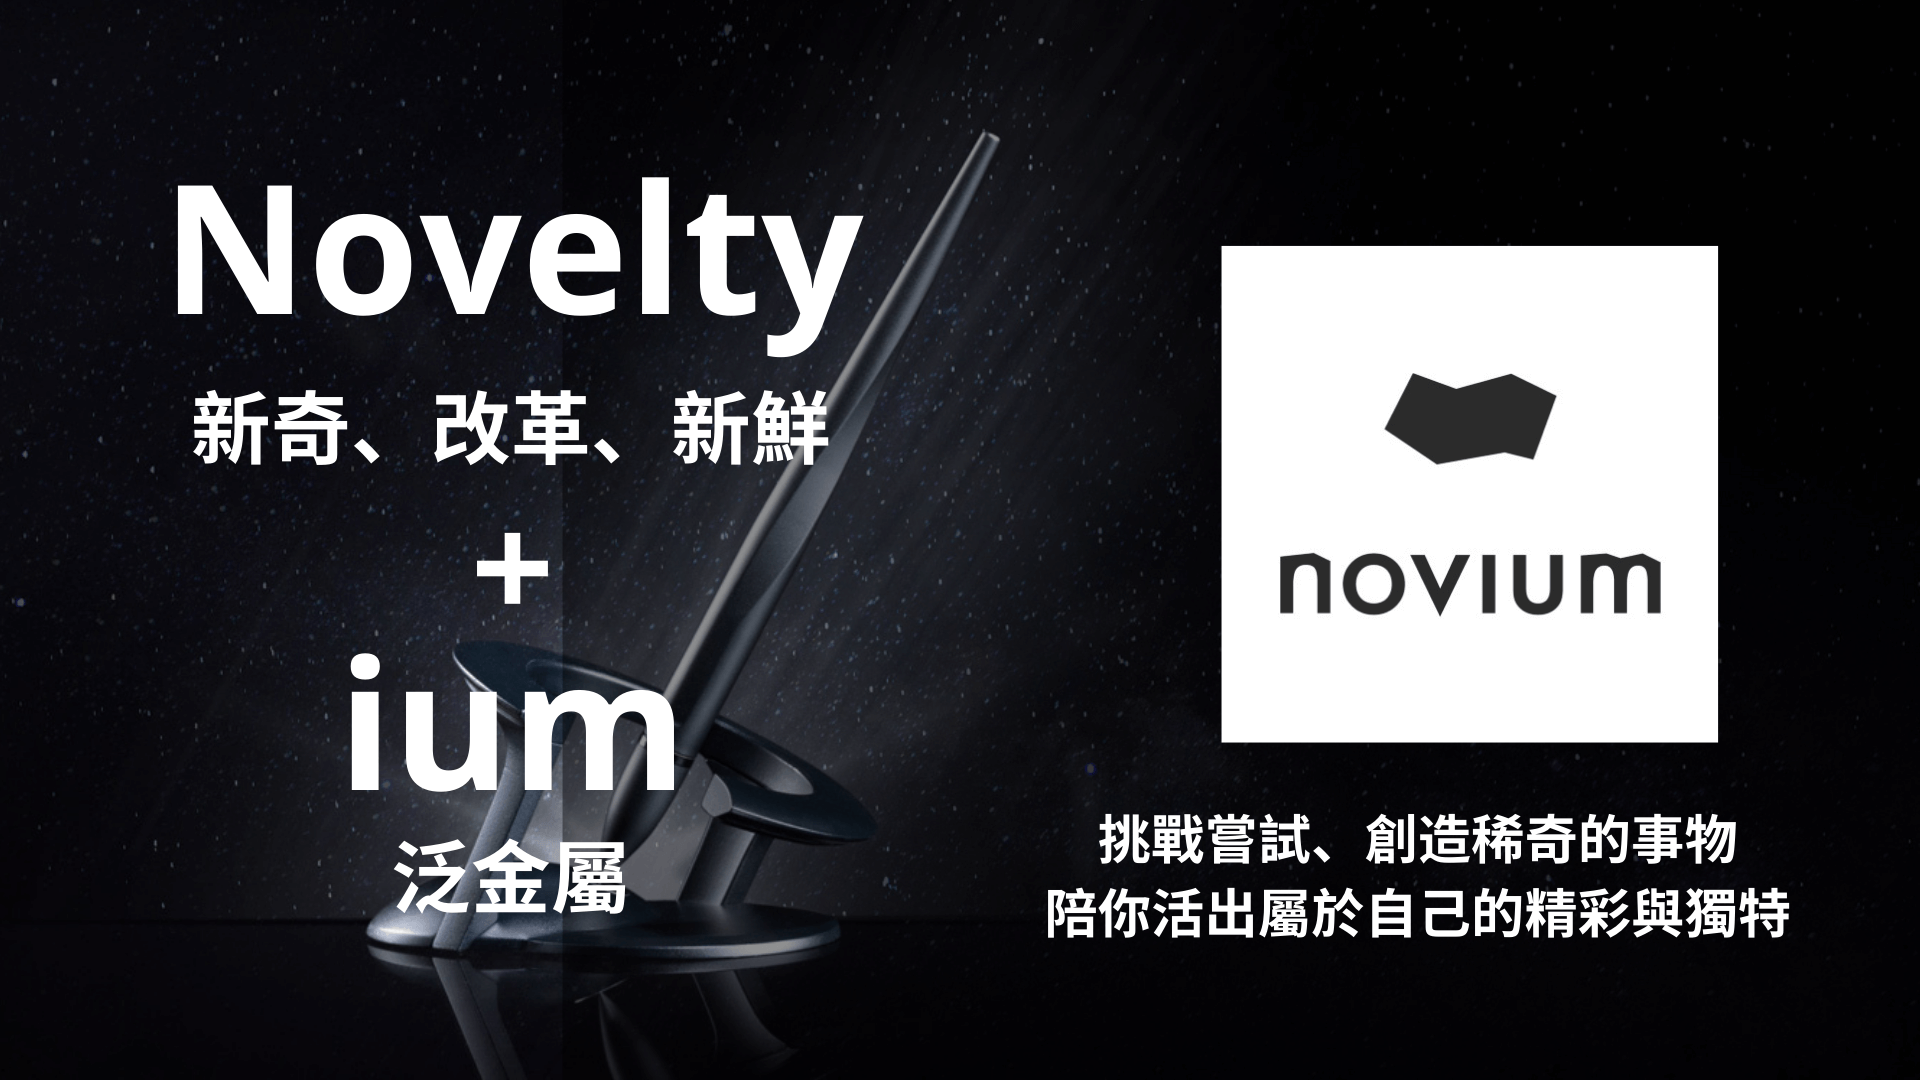 Novium - Brand Name meaning